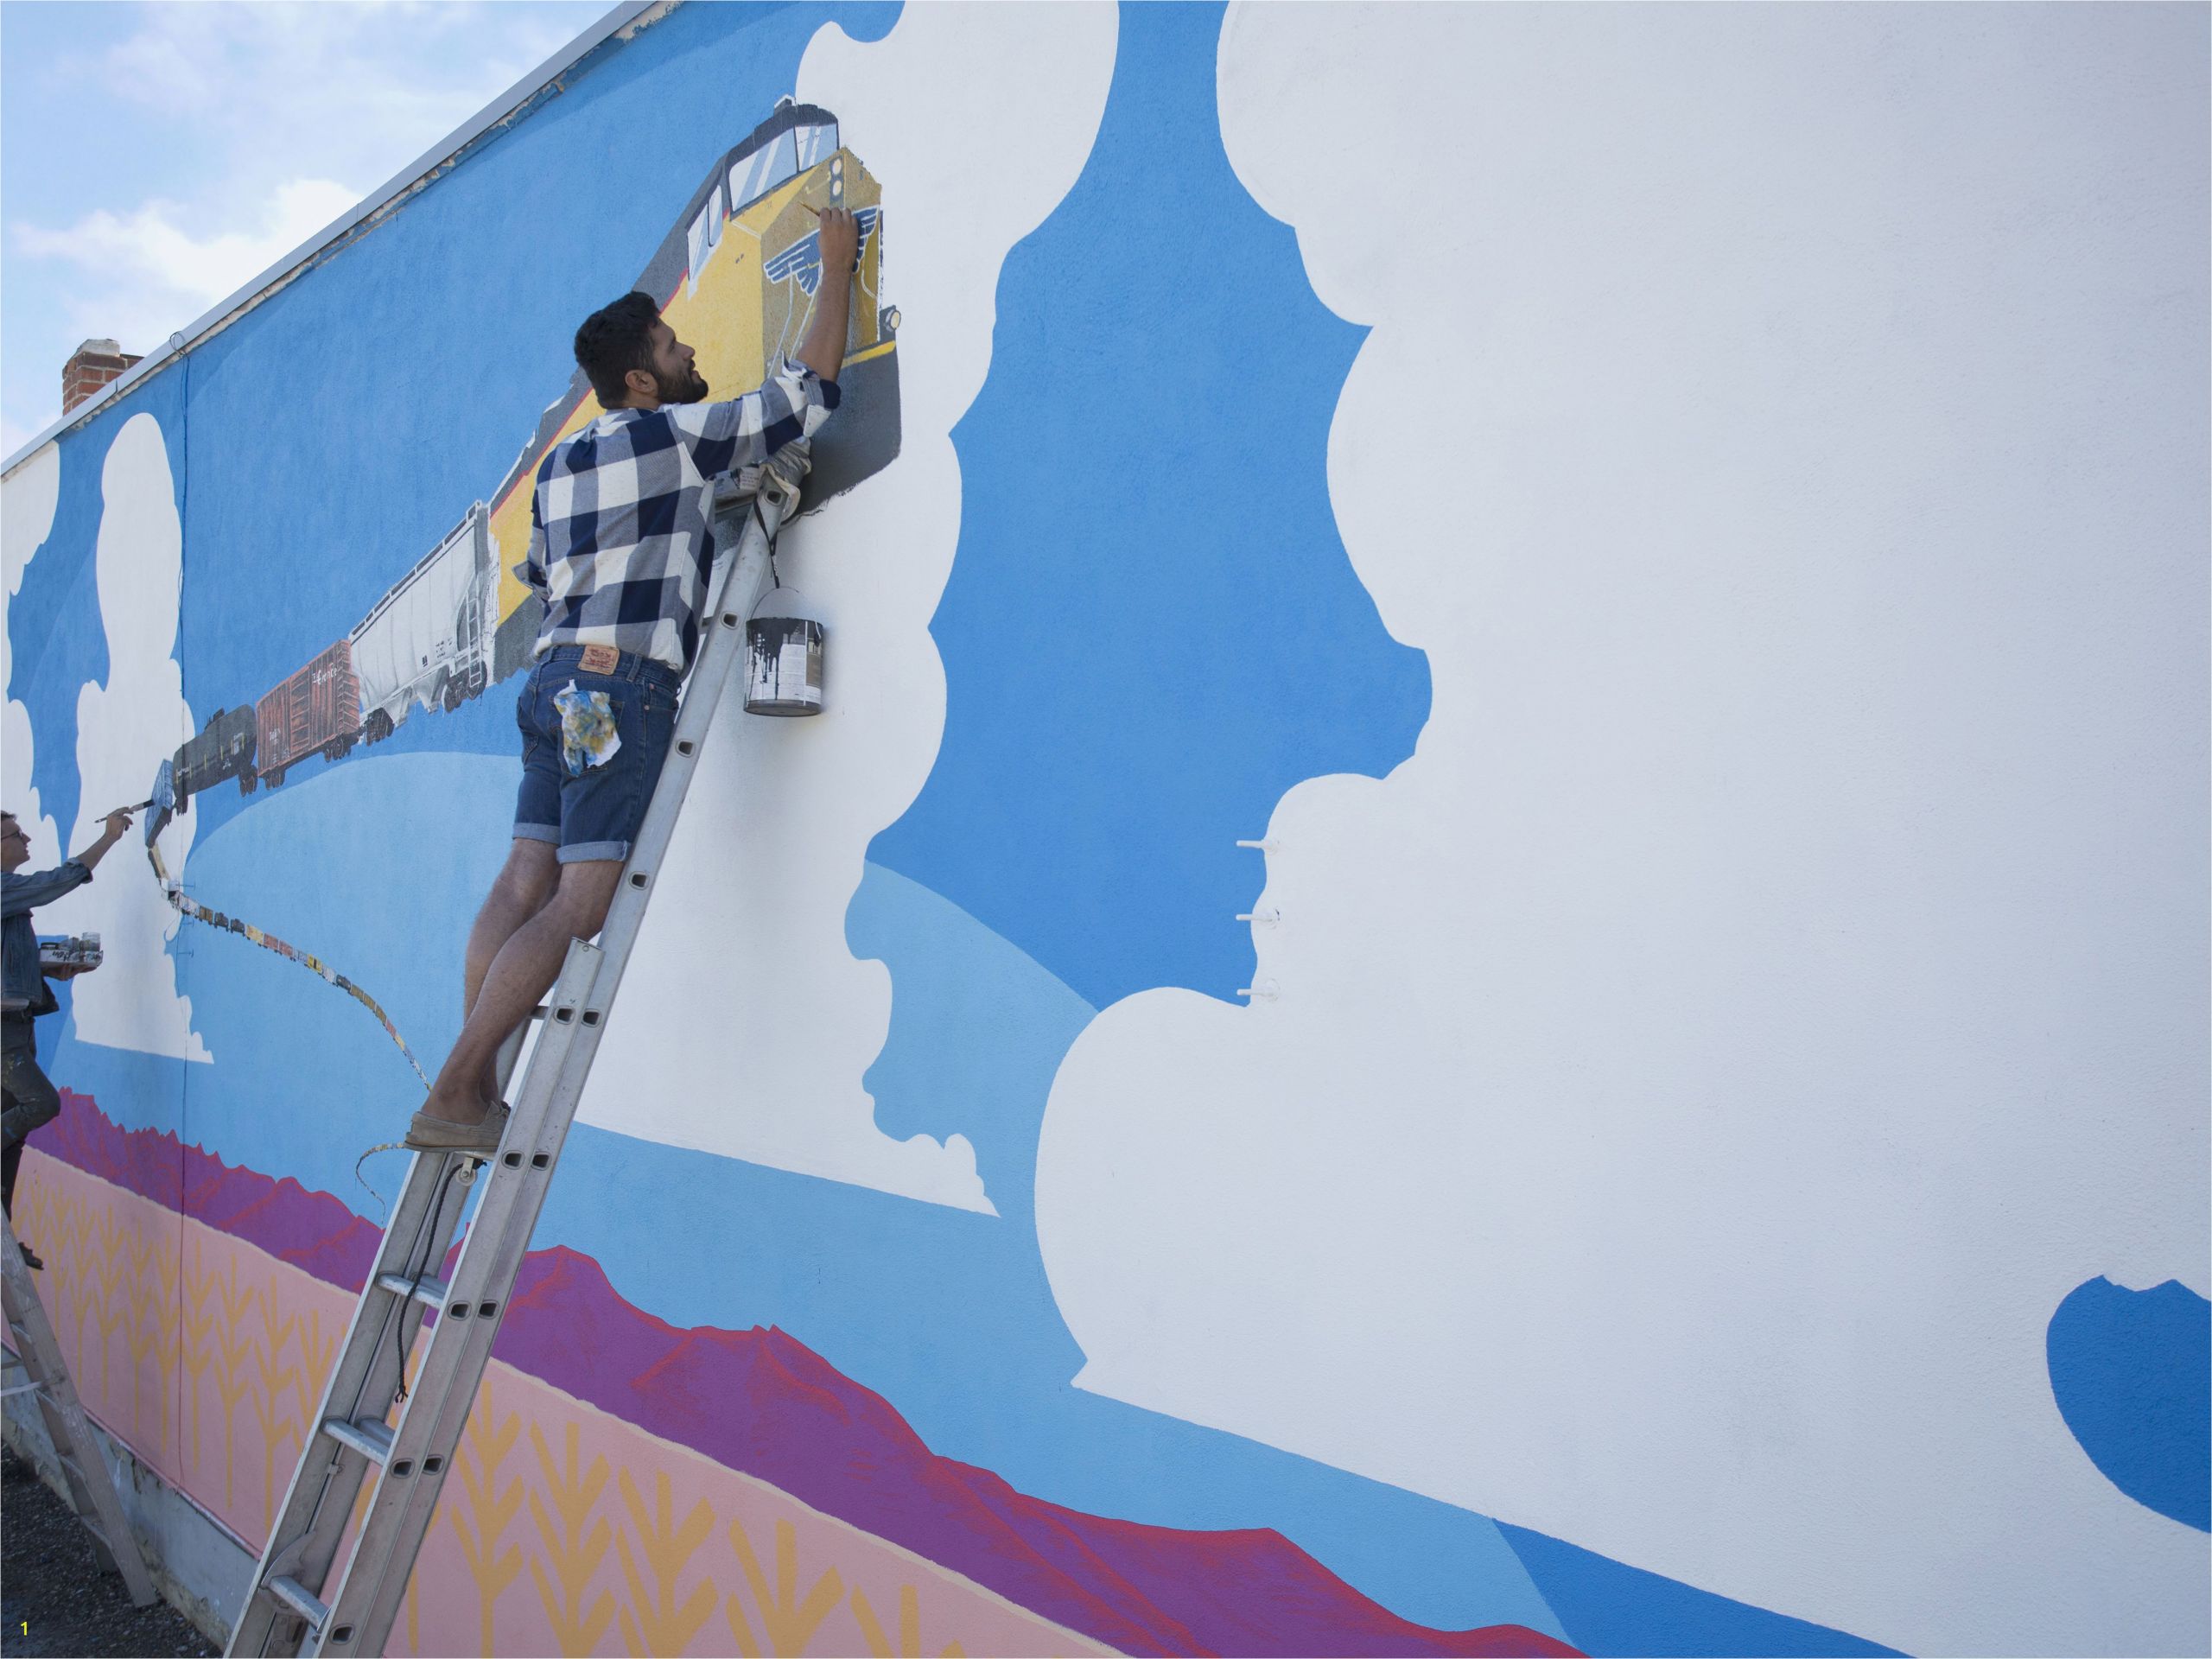 artists painting mural wall fdc5f9b58d5b185b9c4